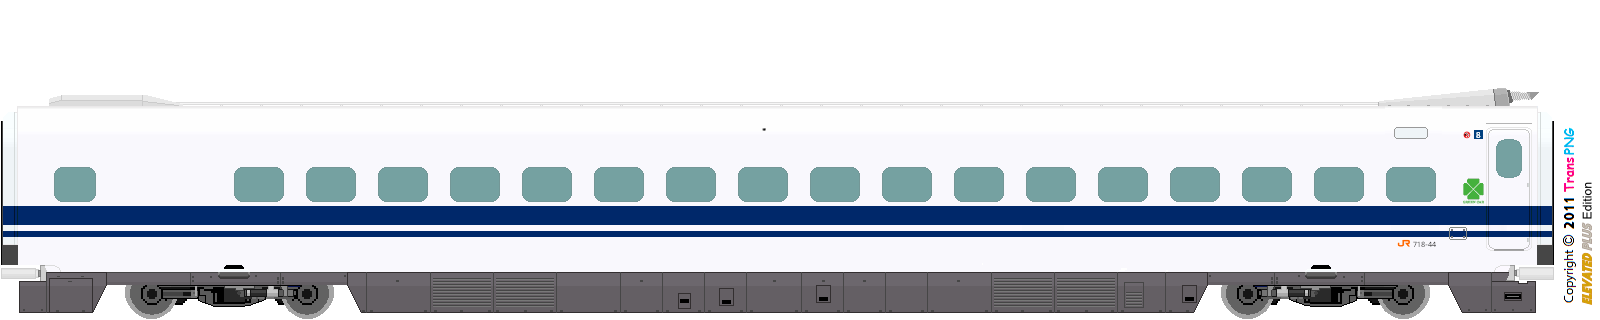 [9011] Central Japan Railway 52287585888_16738c4dde_o